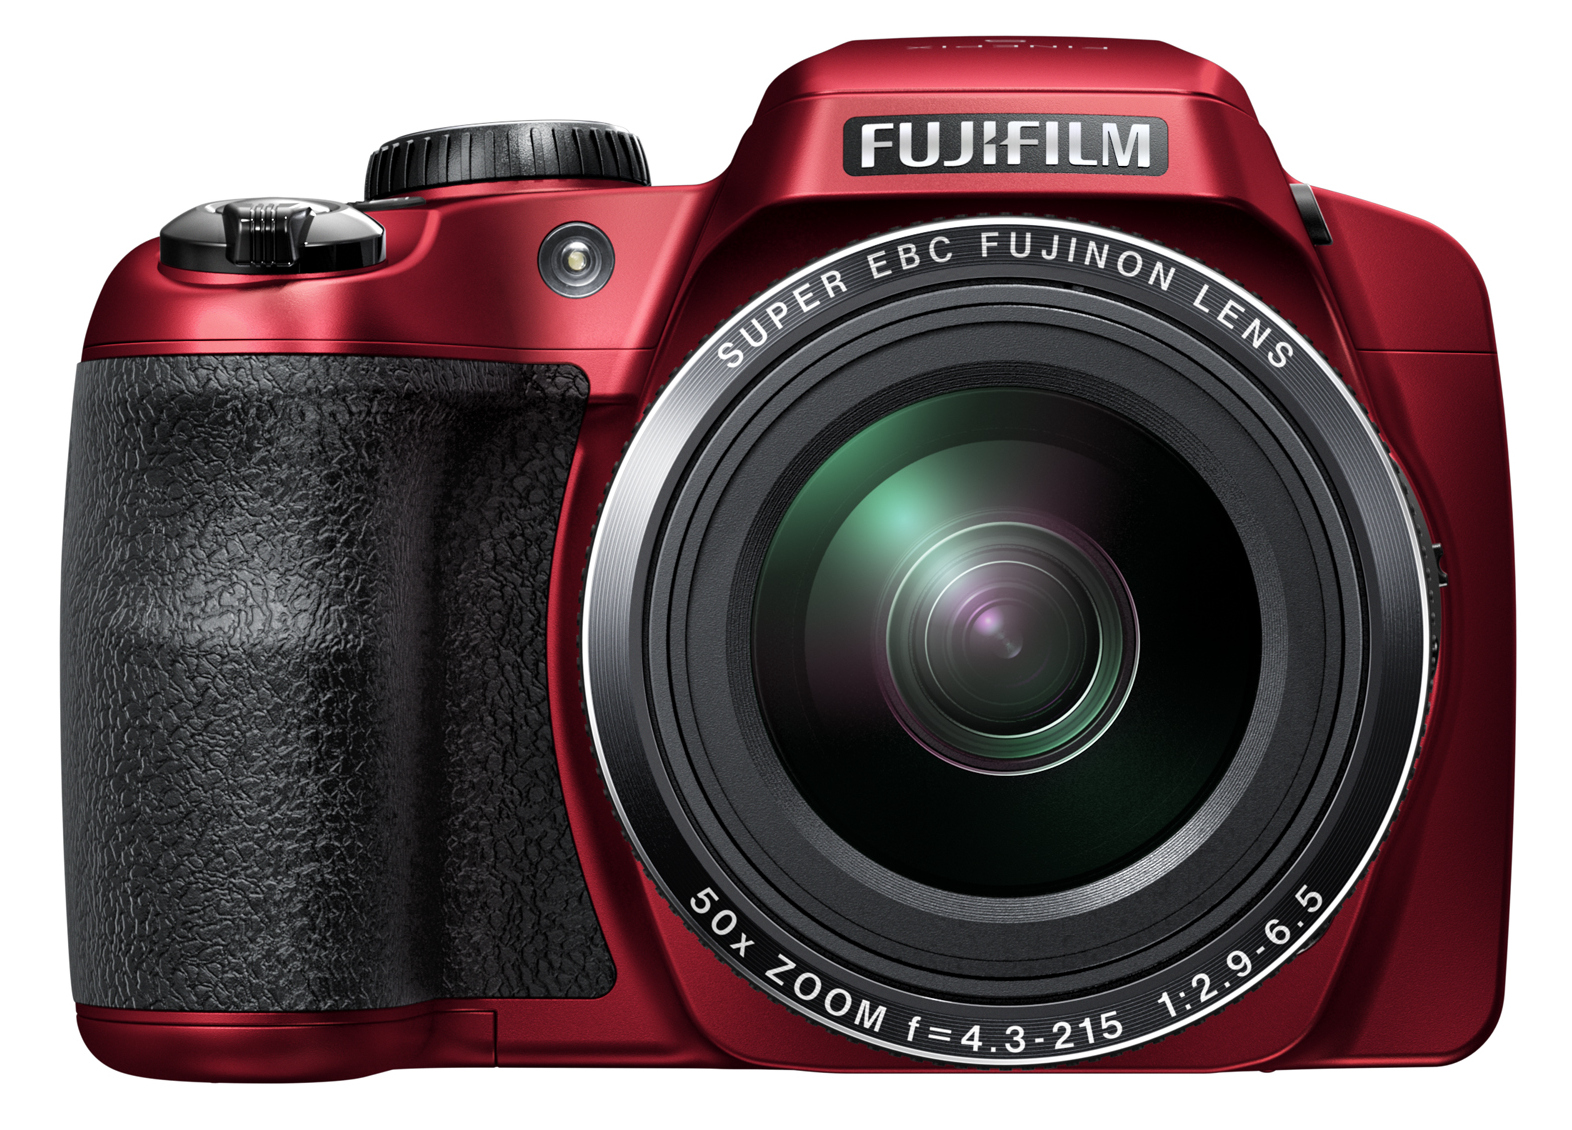 Fujifilm FinePix S9200 Digital Camera